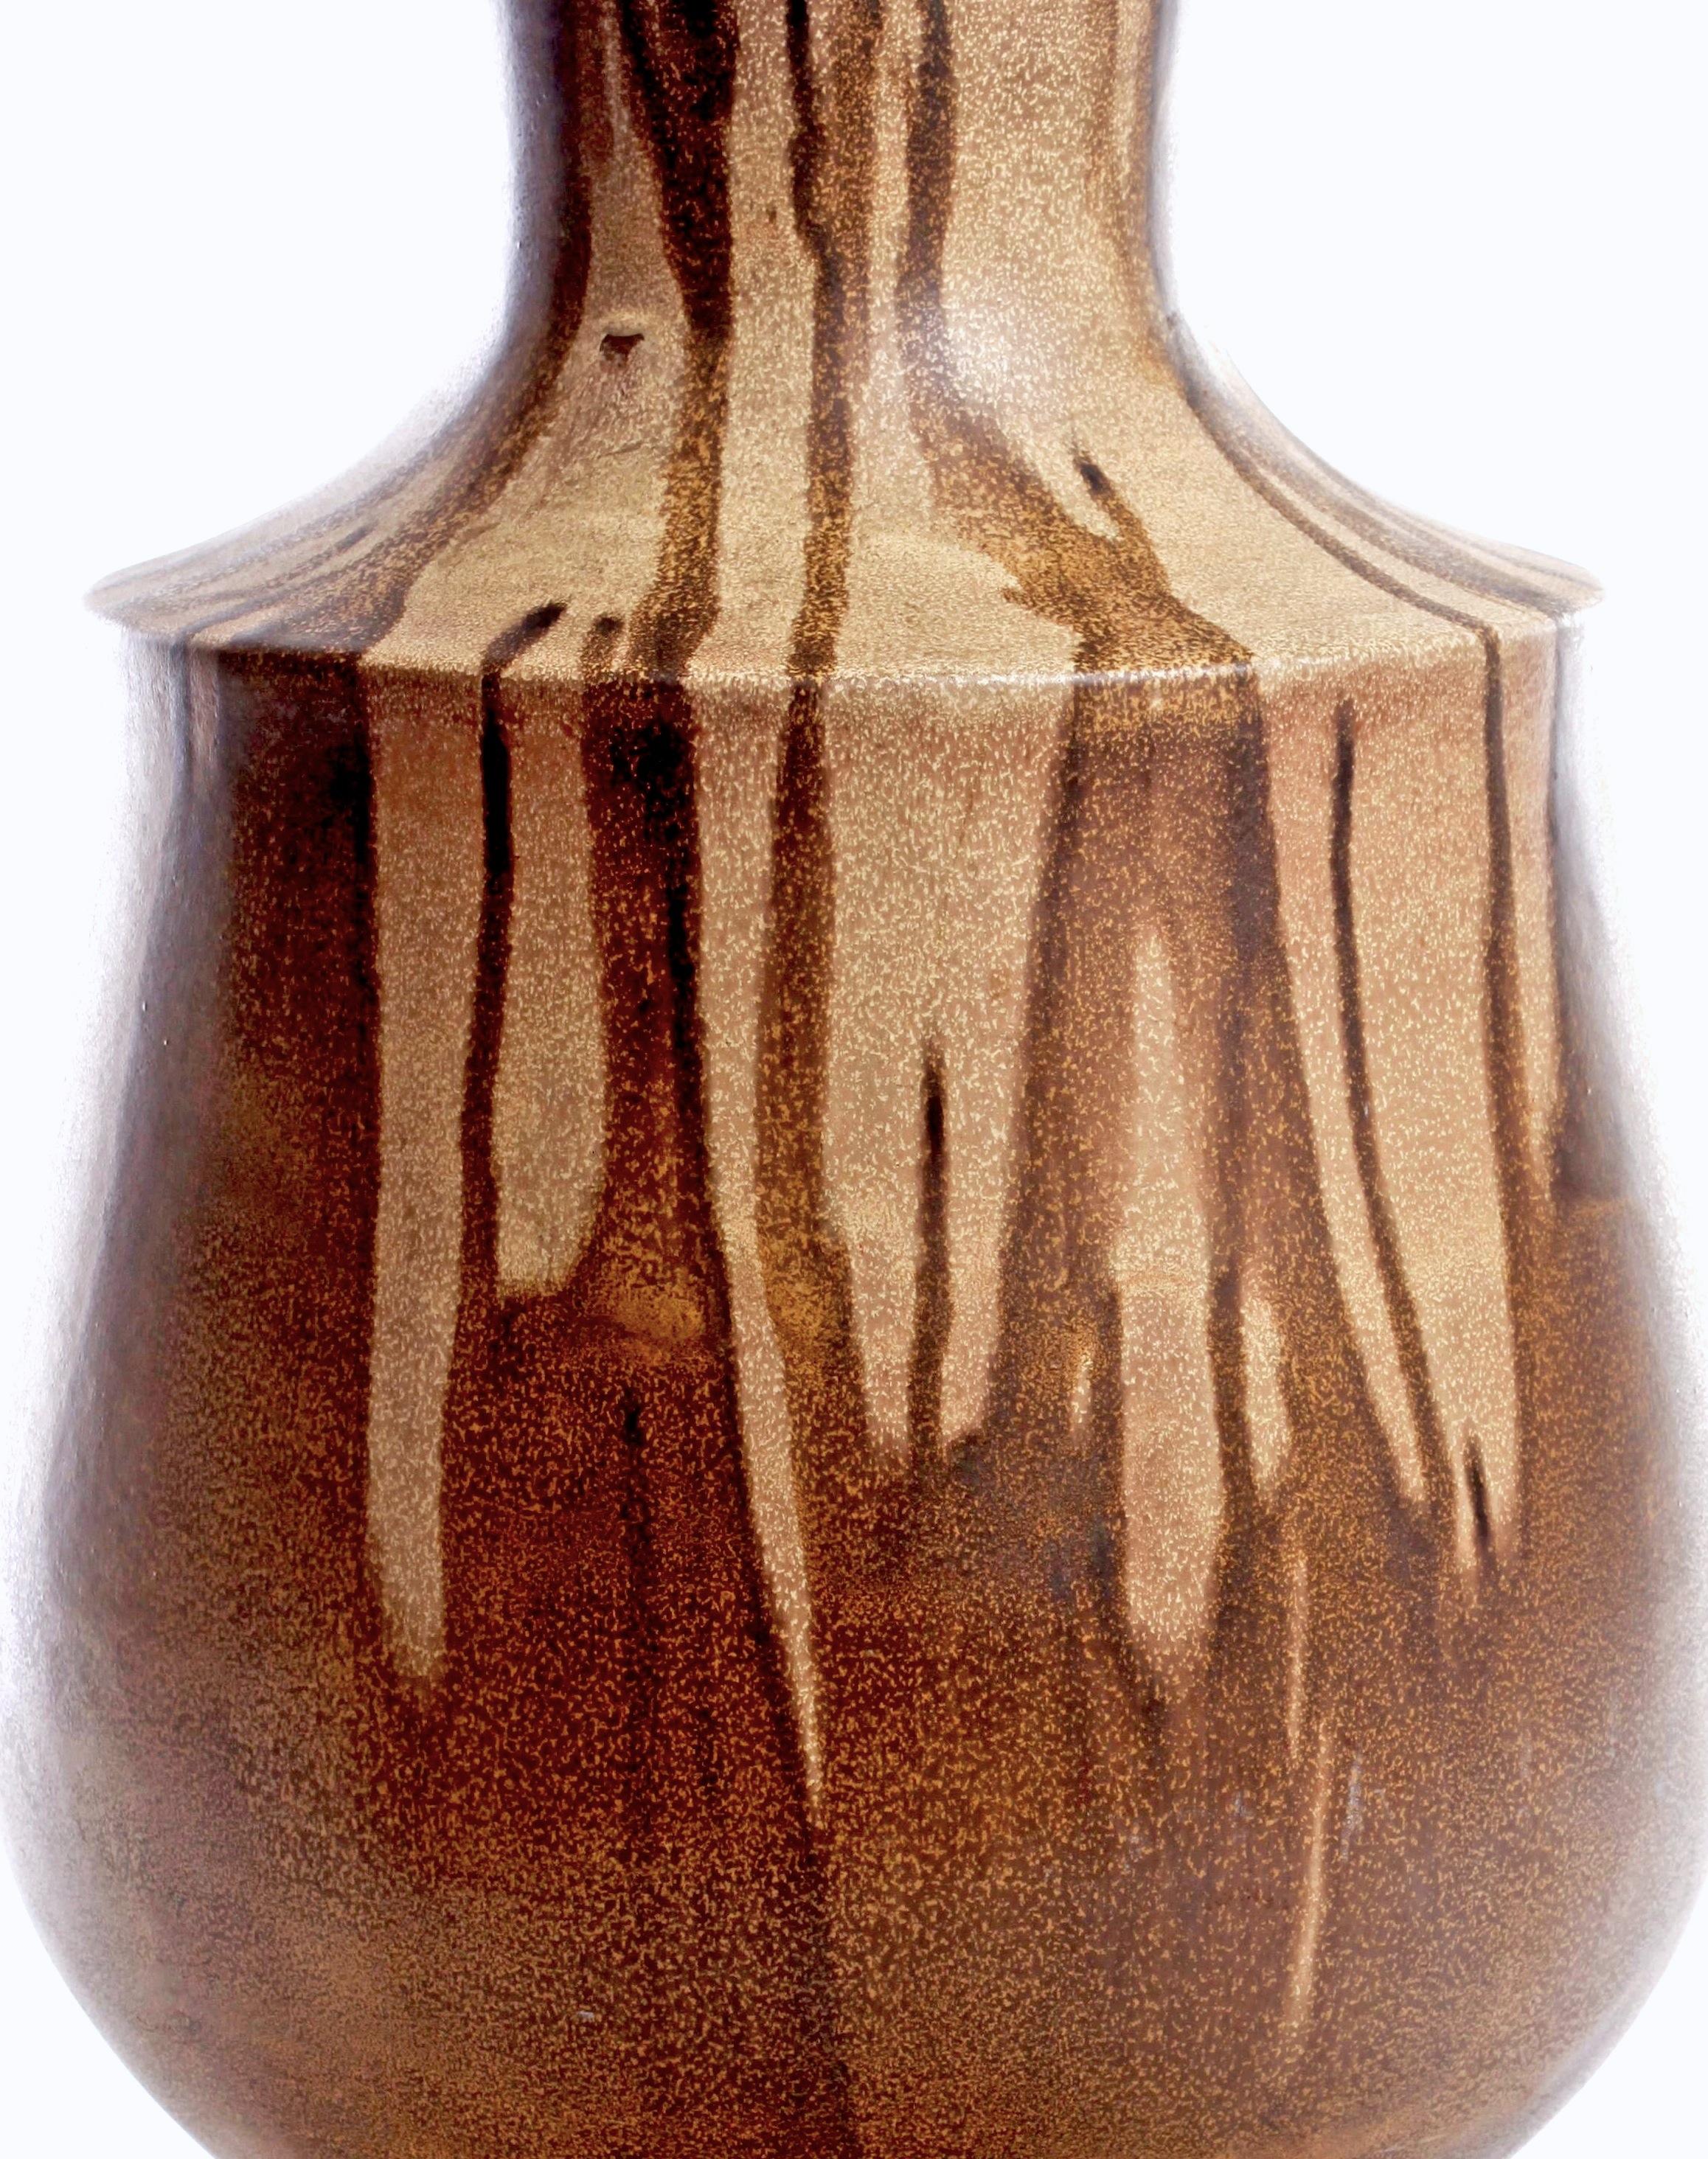 Glazed Karlsruhe German Ceramic Drippy Extra Large Striped Vase, circa 1970s For Sale